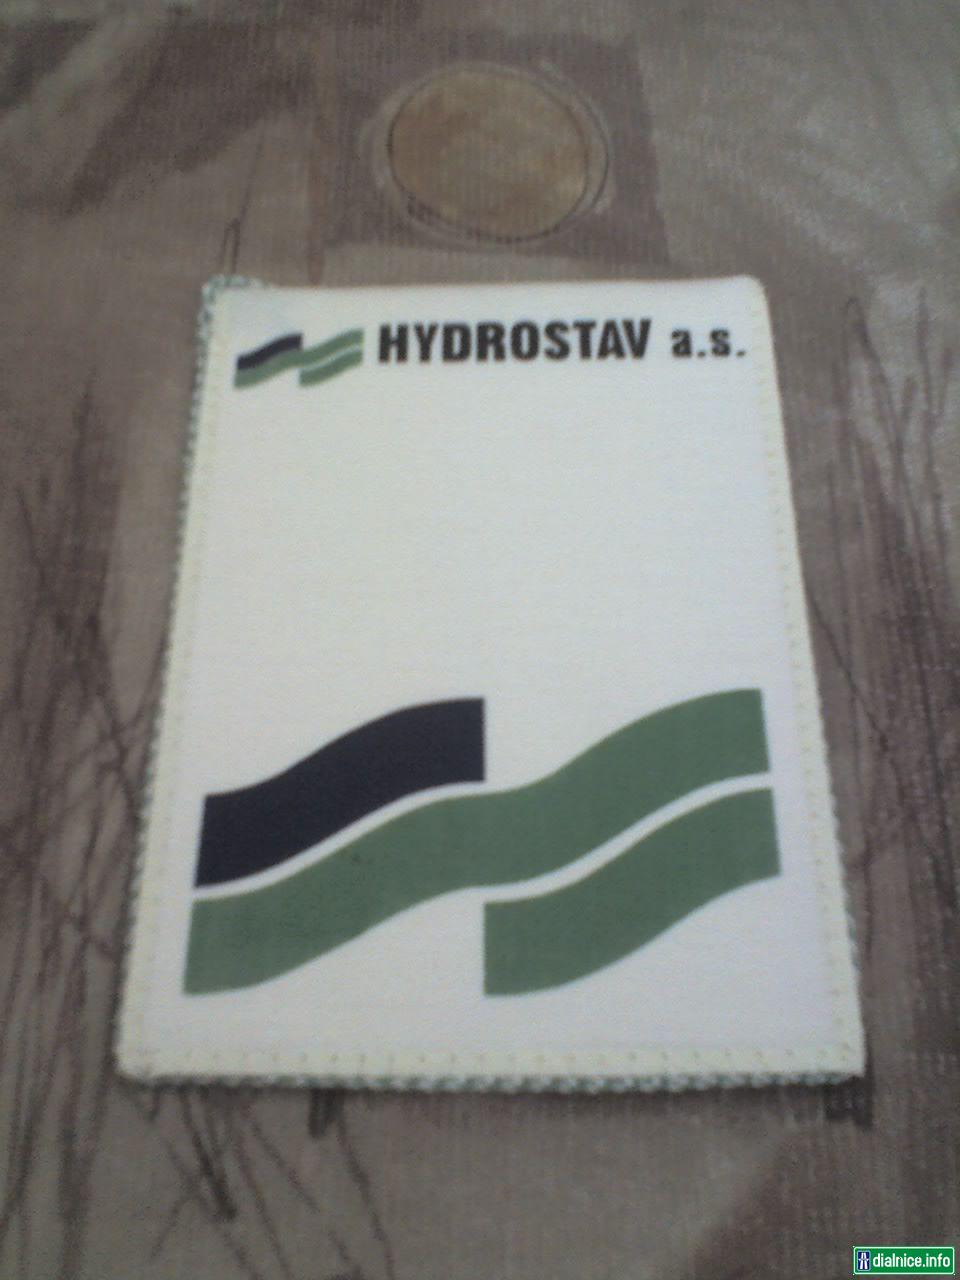 Hydrostav,a.s. Bratislava